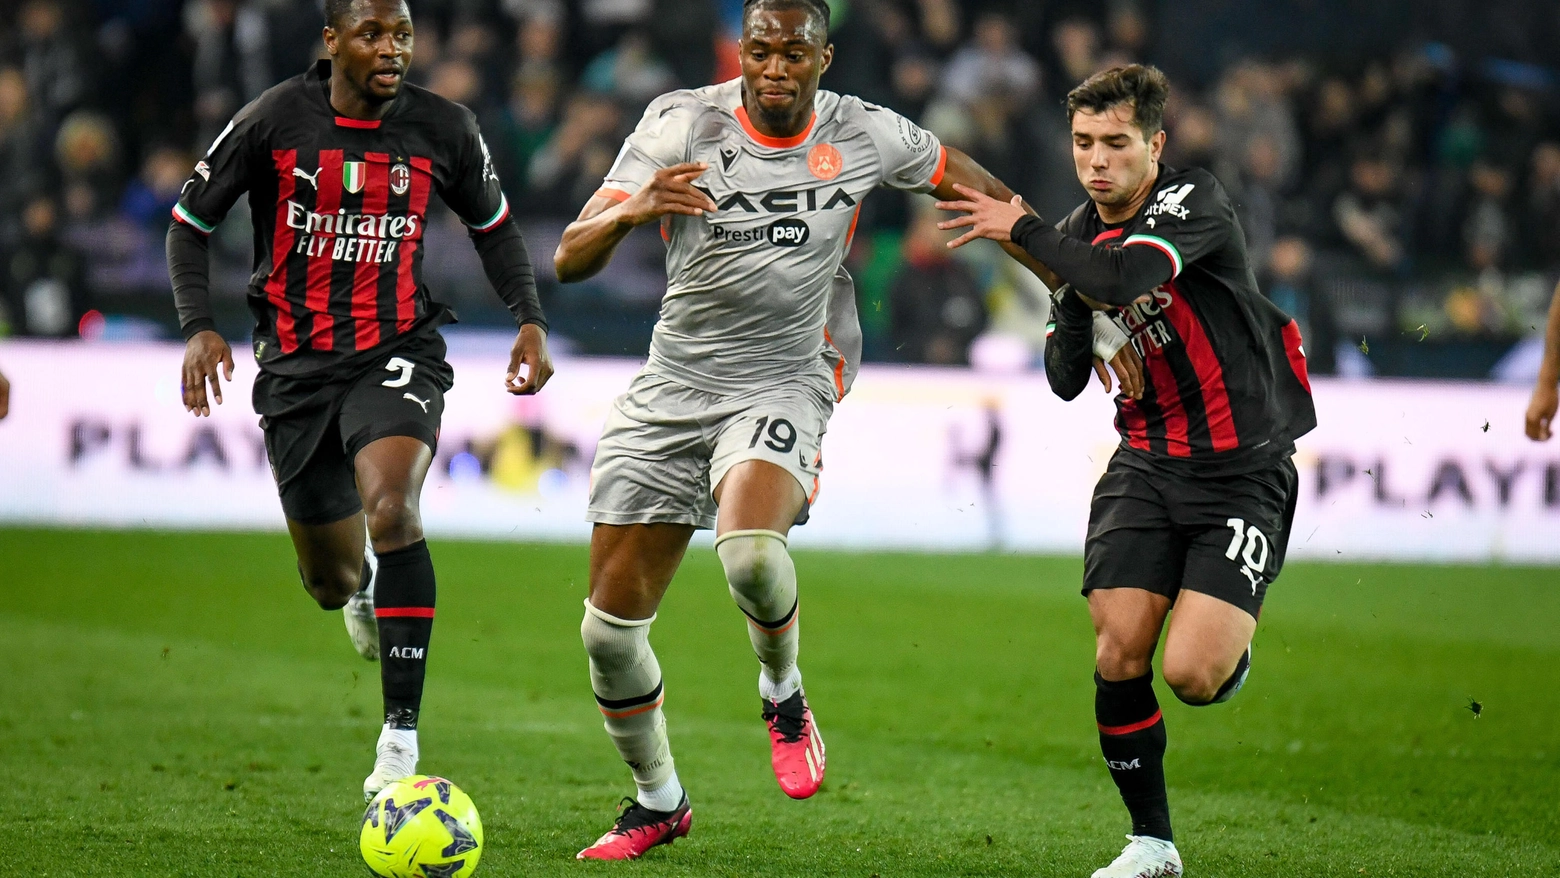 Udinese-Milan, le pagelle rossonere: disastro Kalulu, Diaz unica certezza